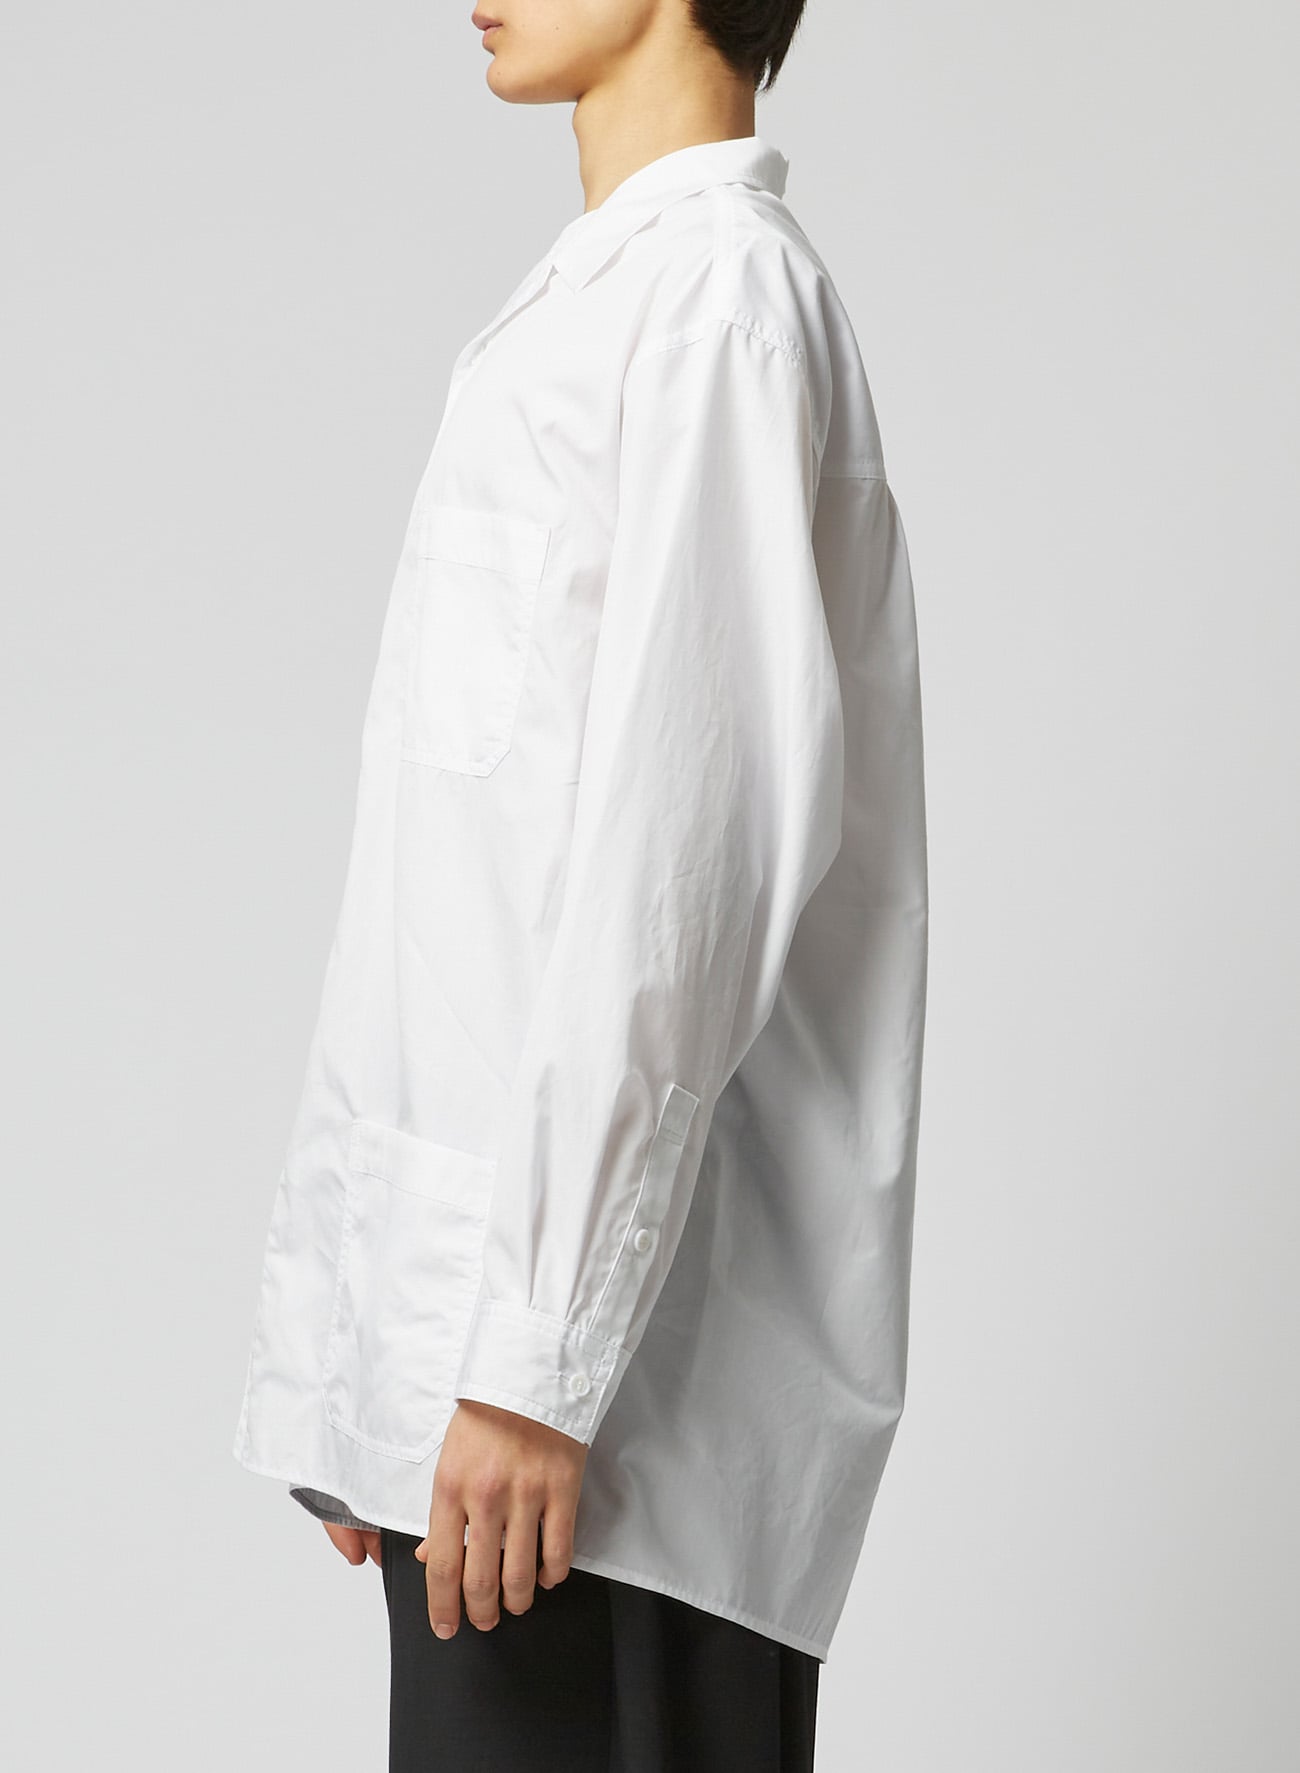 3-POCKET OPEN COLLAR SHIRT(S White): power of the WHITE shirt｜THE 